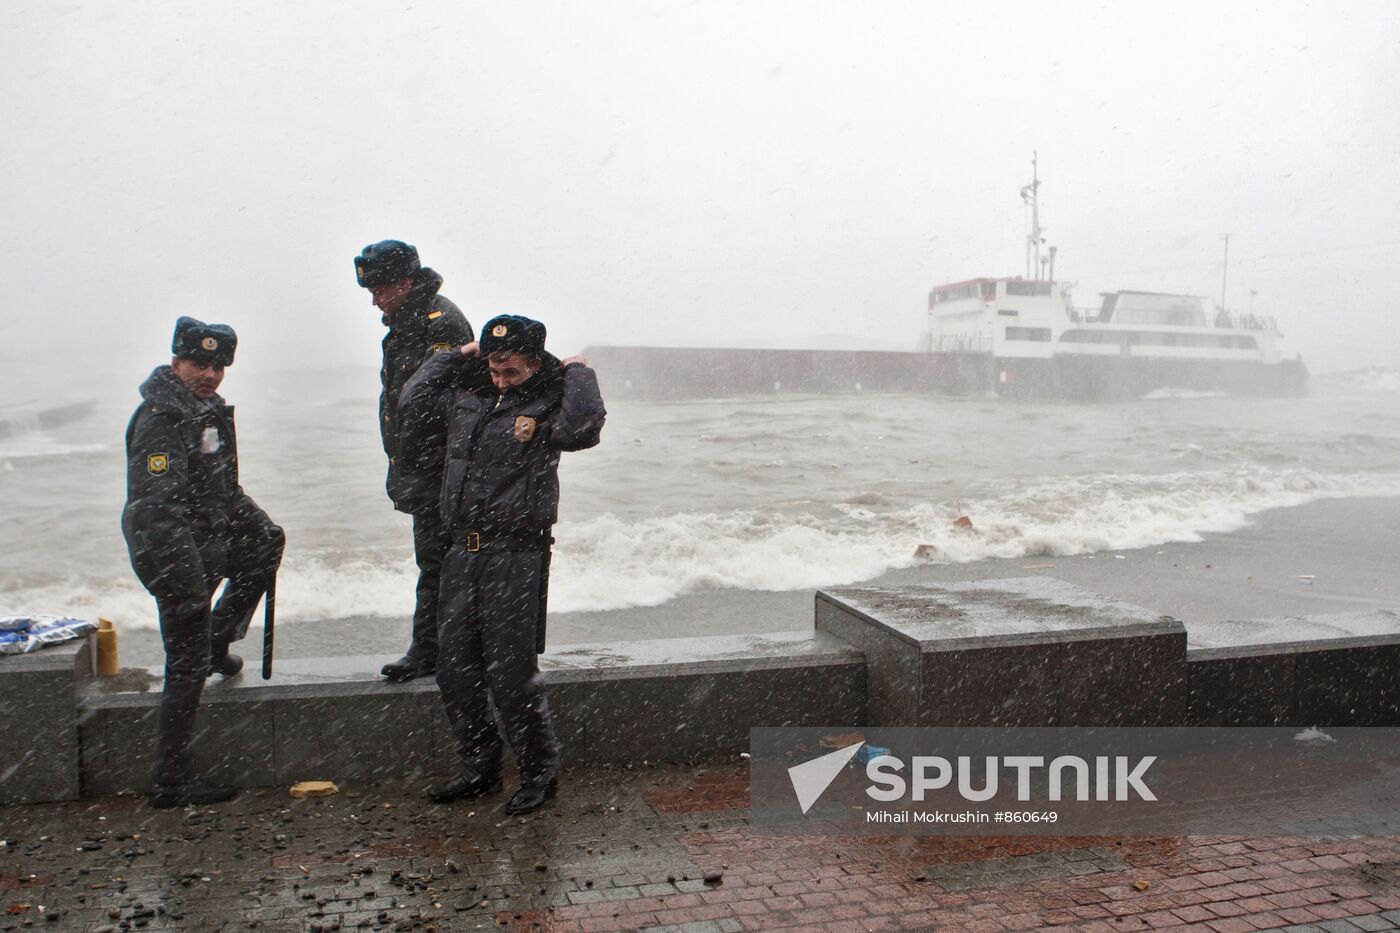 Storm wrecks Turkish bulk carrier off Black Sea coast near Sochi